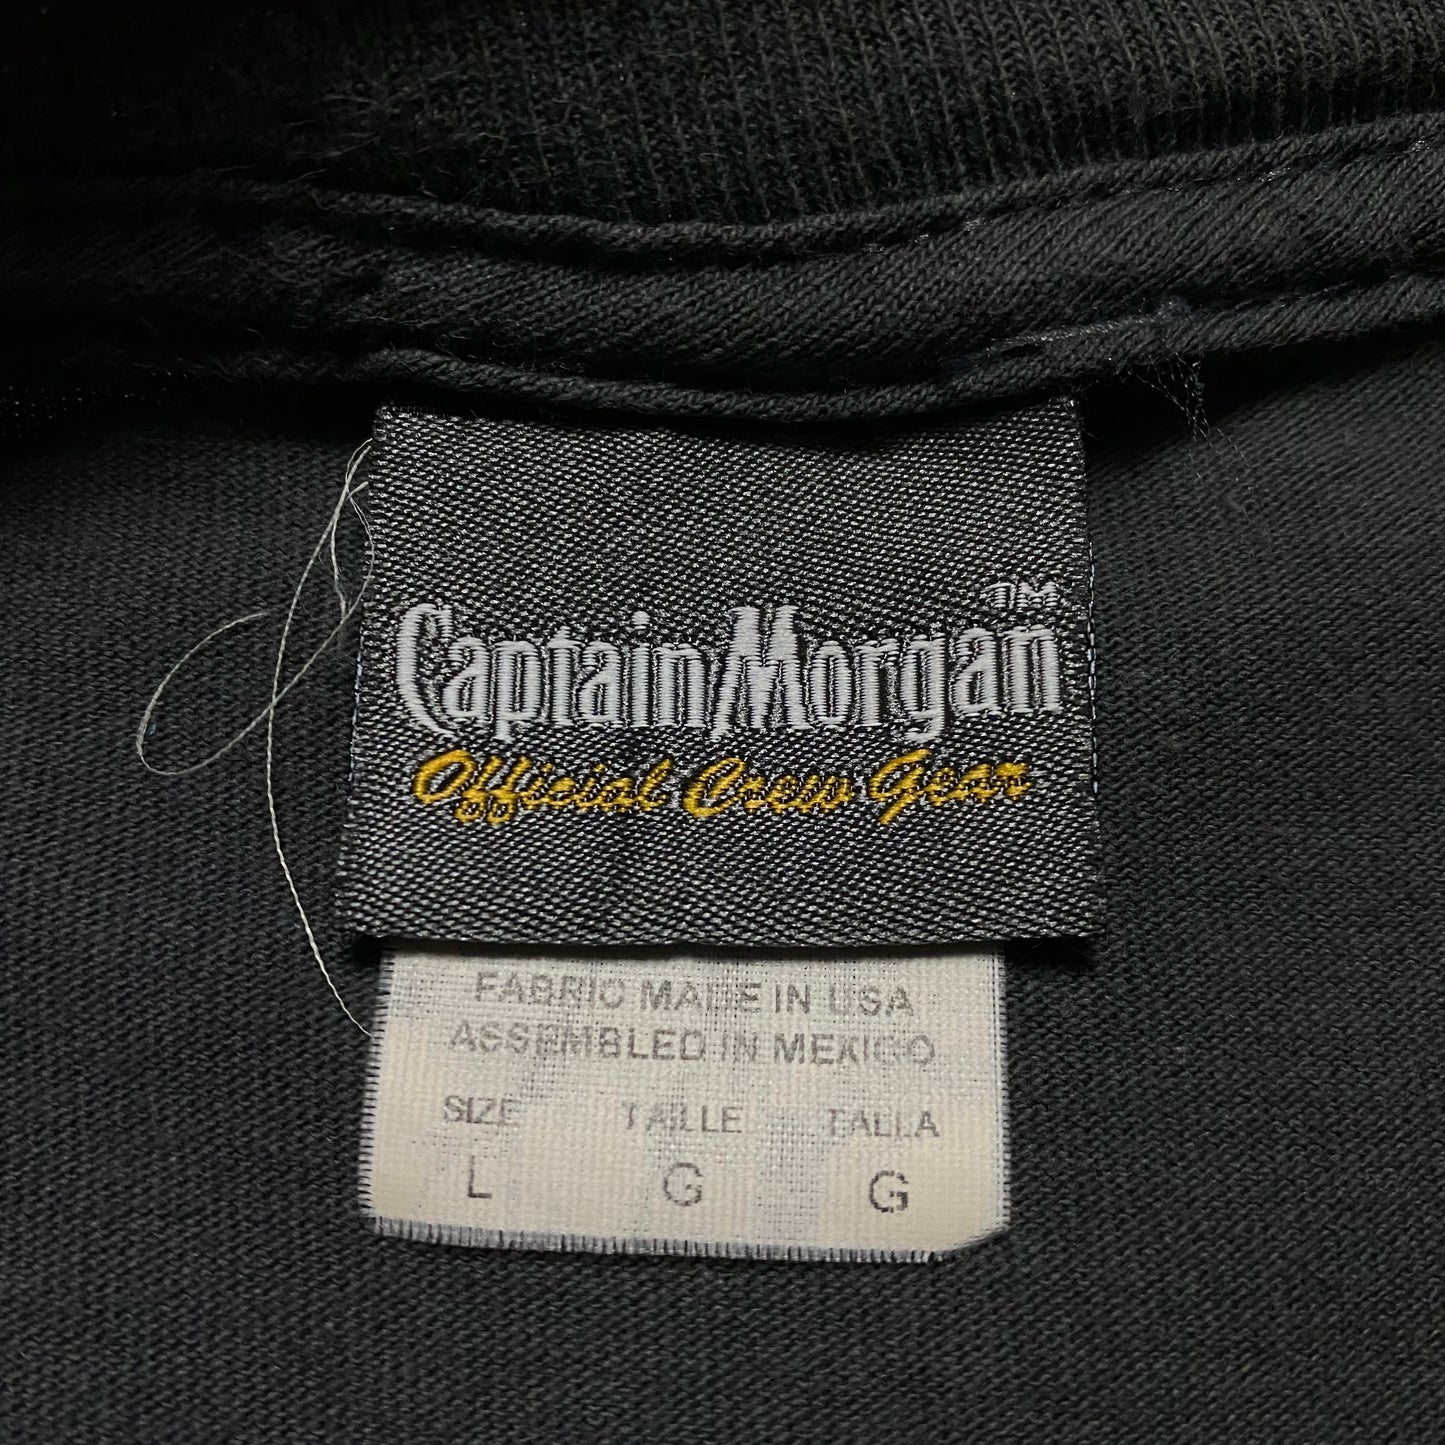 00's "Captain Morgan" T-SHIRT